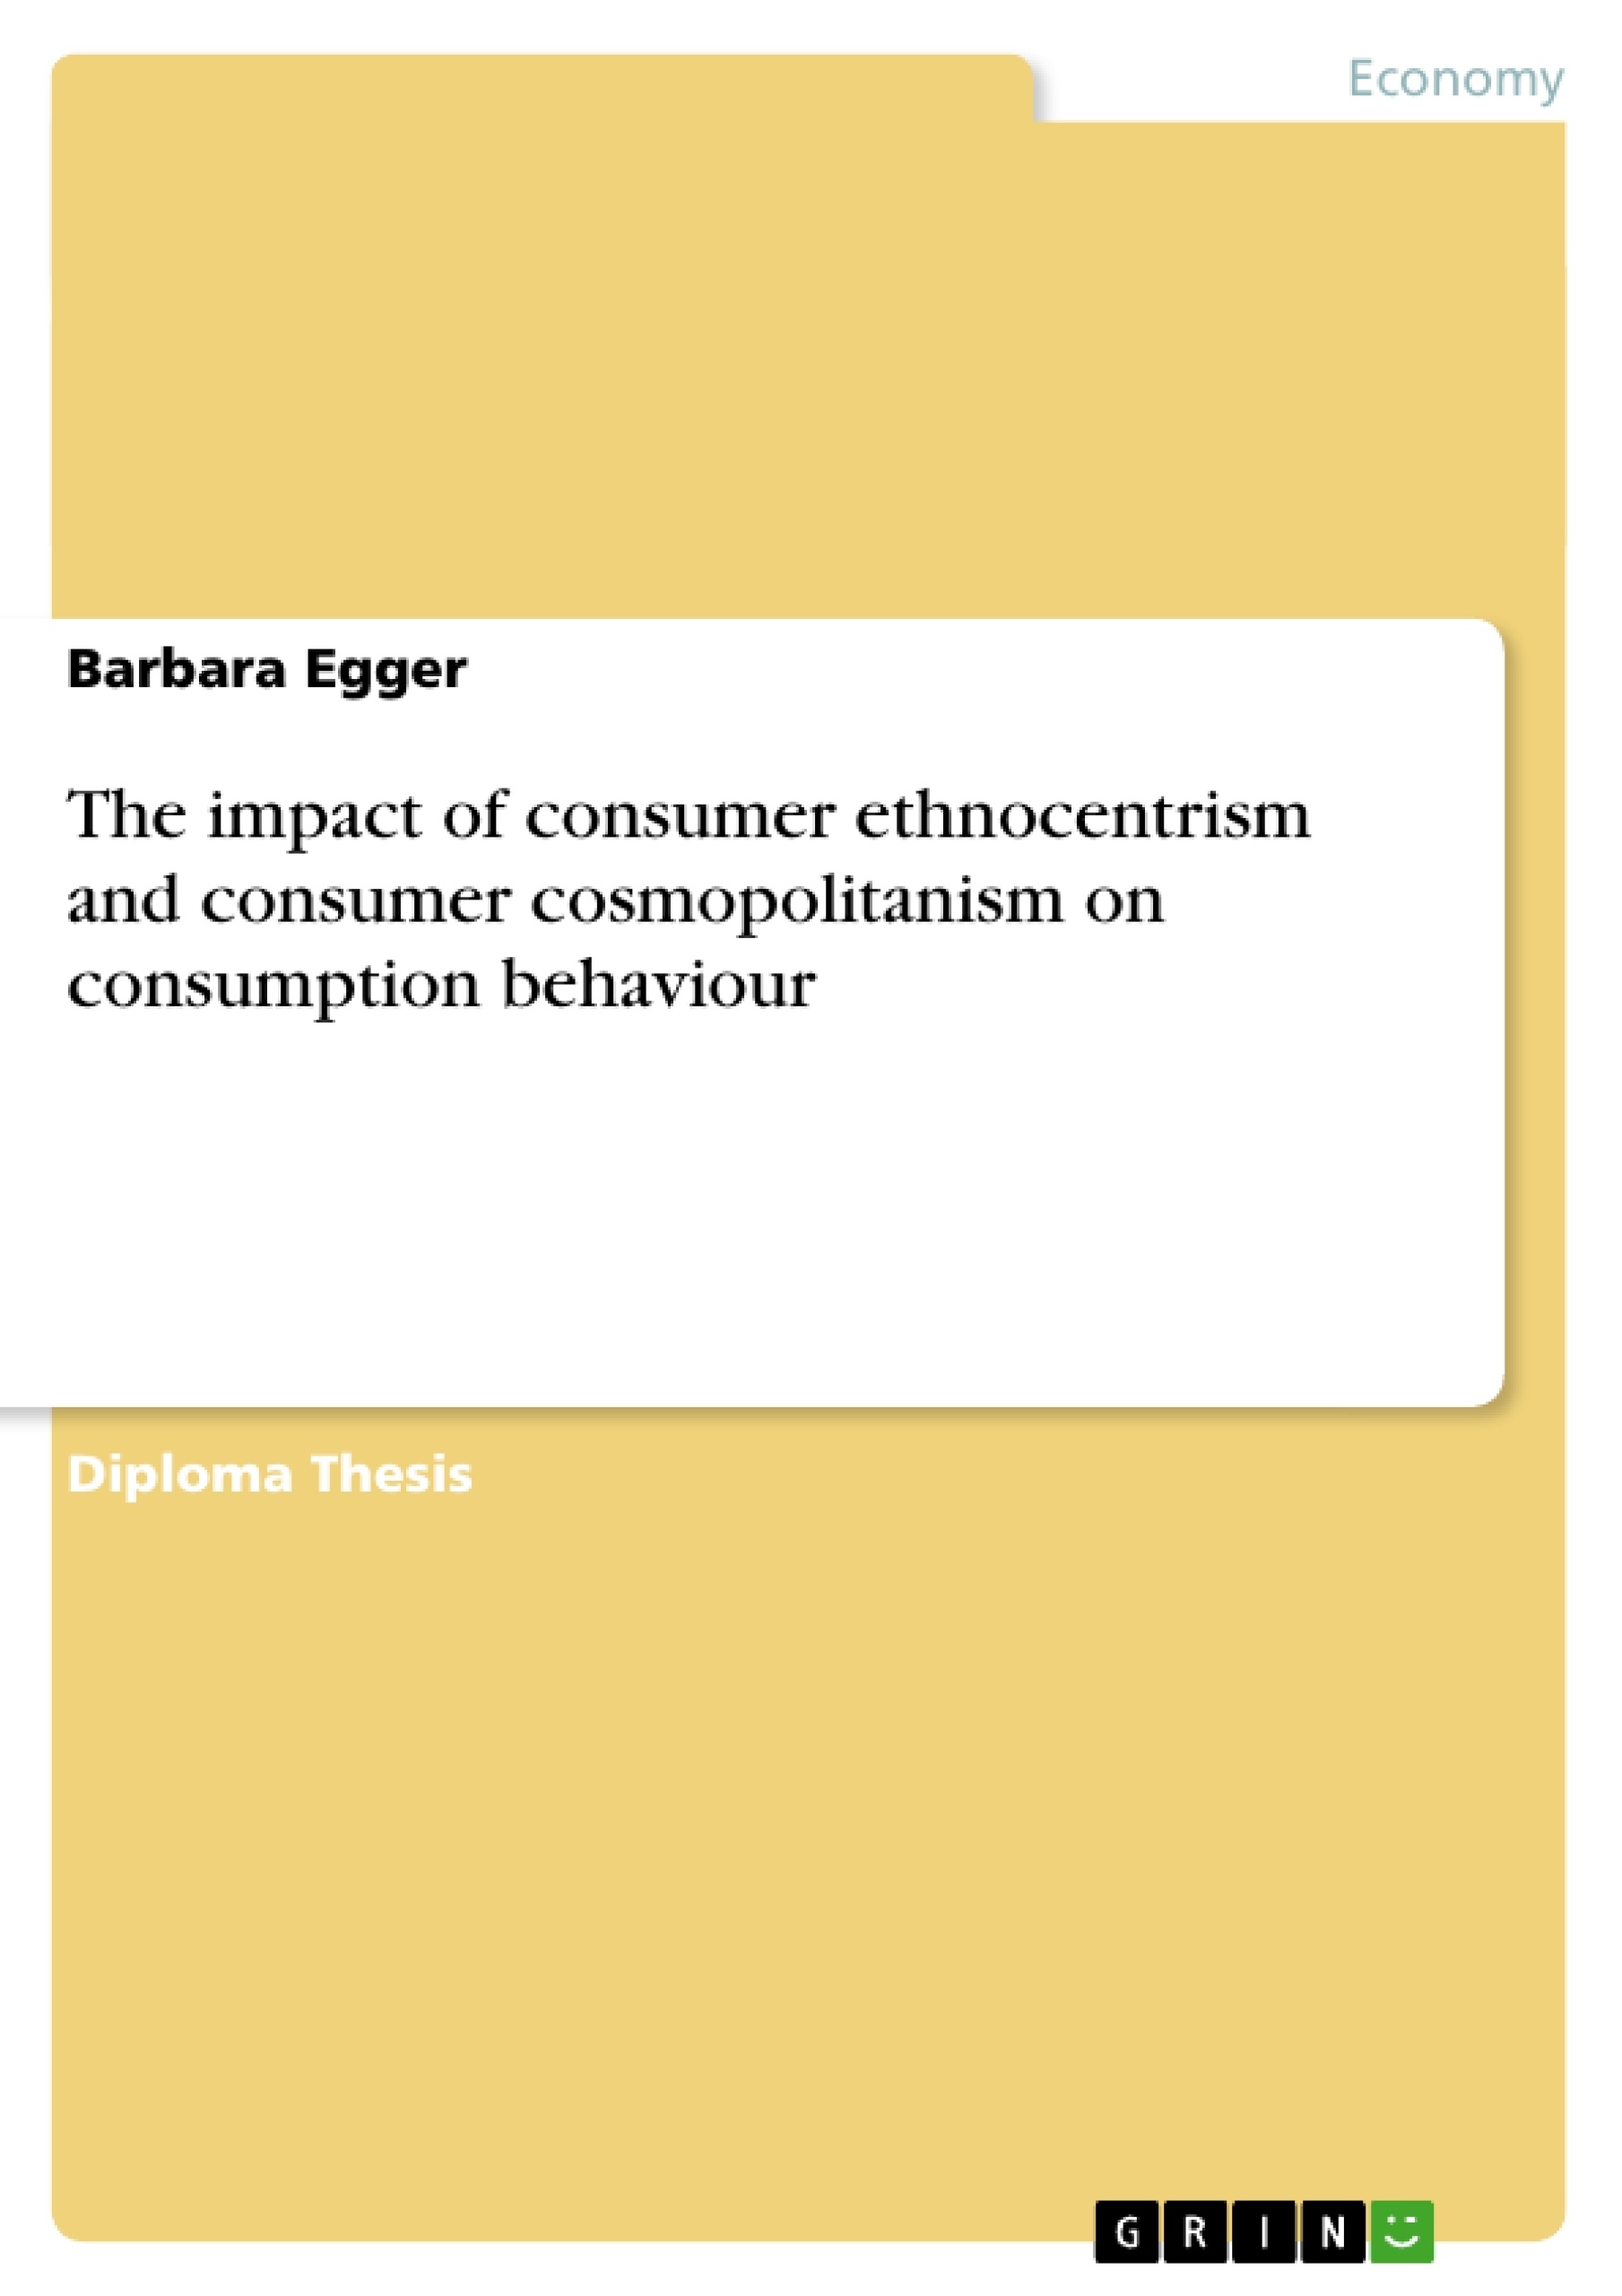 Title: The impact of consumer ethnocentrism and consumer cosmopolitanism on consumption behaviour